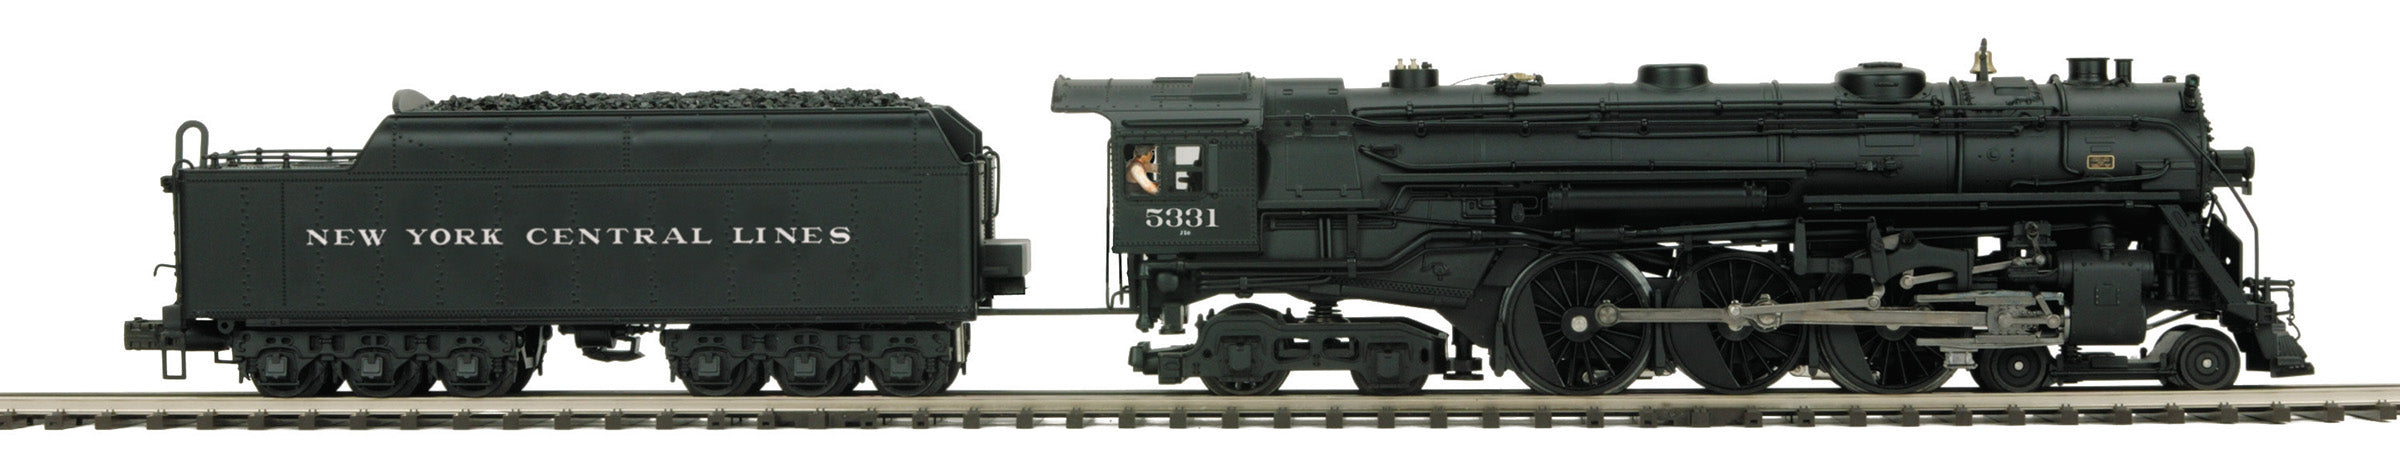 MTH 20-3864-1 - 4-6-4 J-1e Hudson Steam Engine "New York Central Lines" #5331 w/ PS3